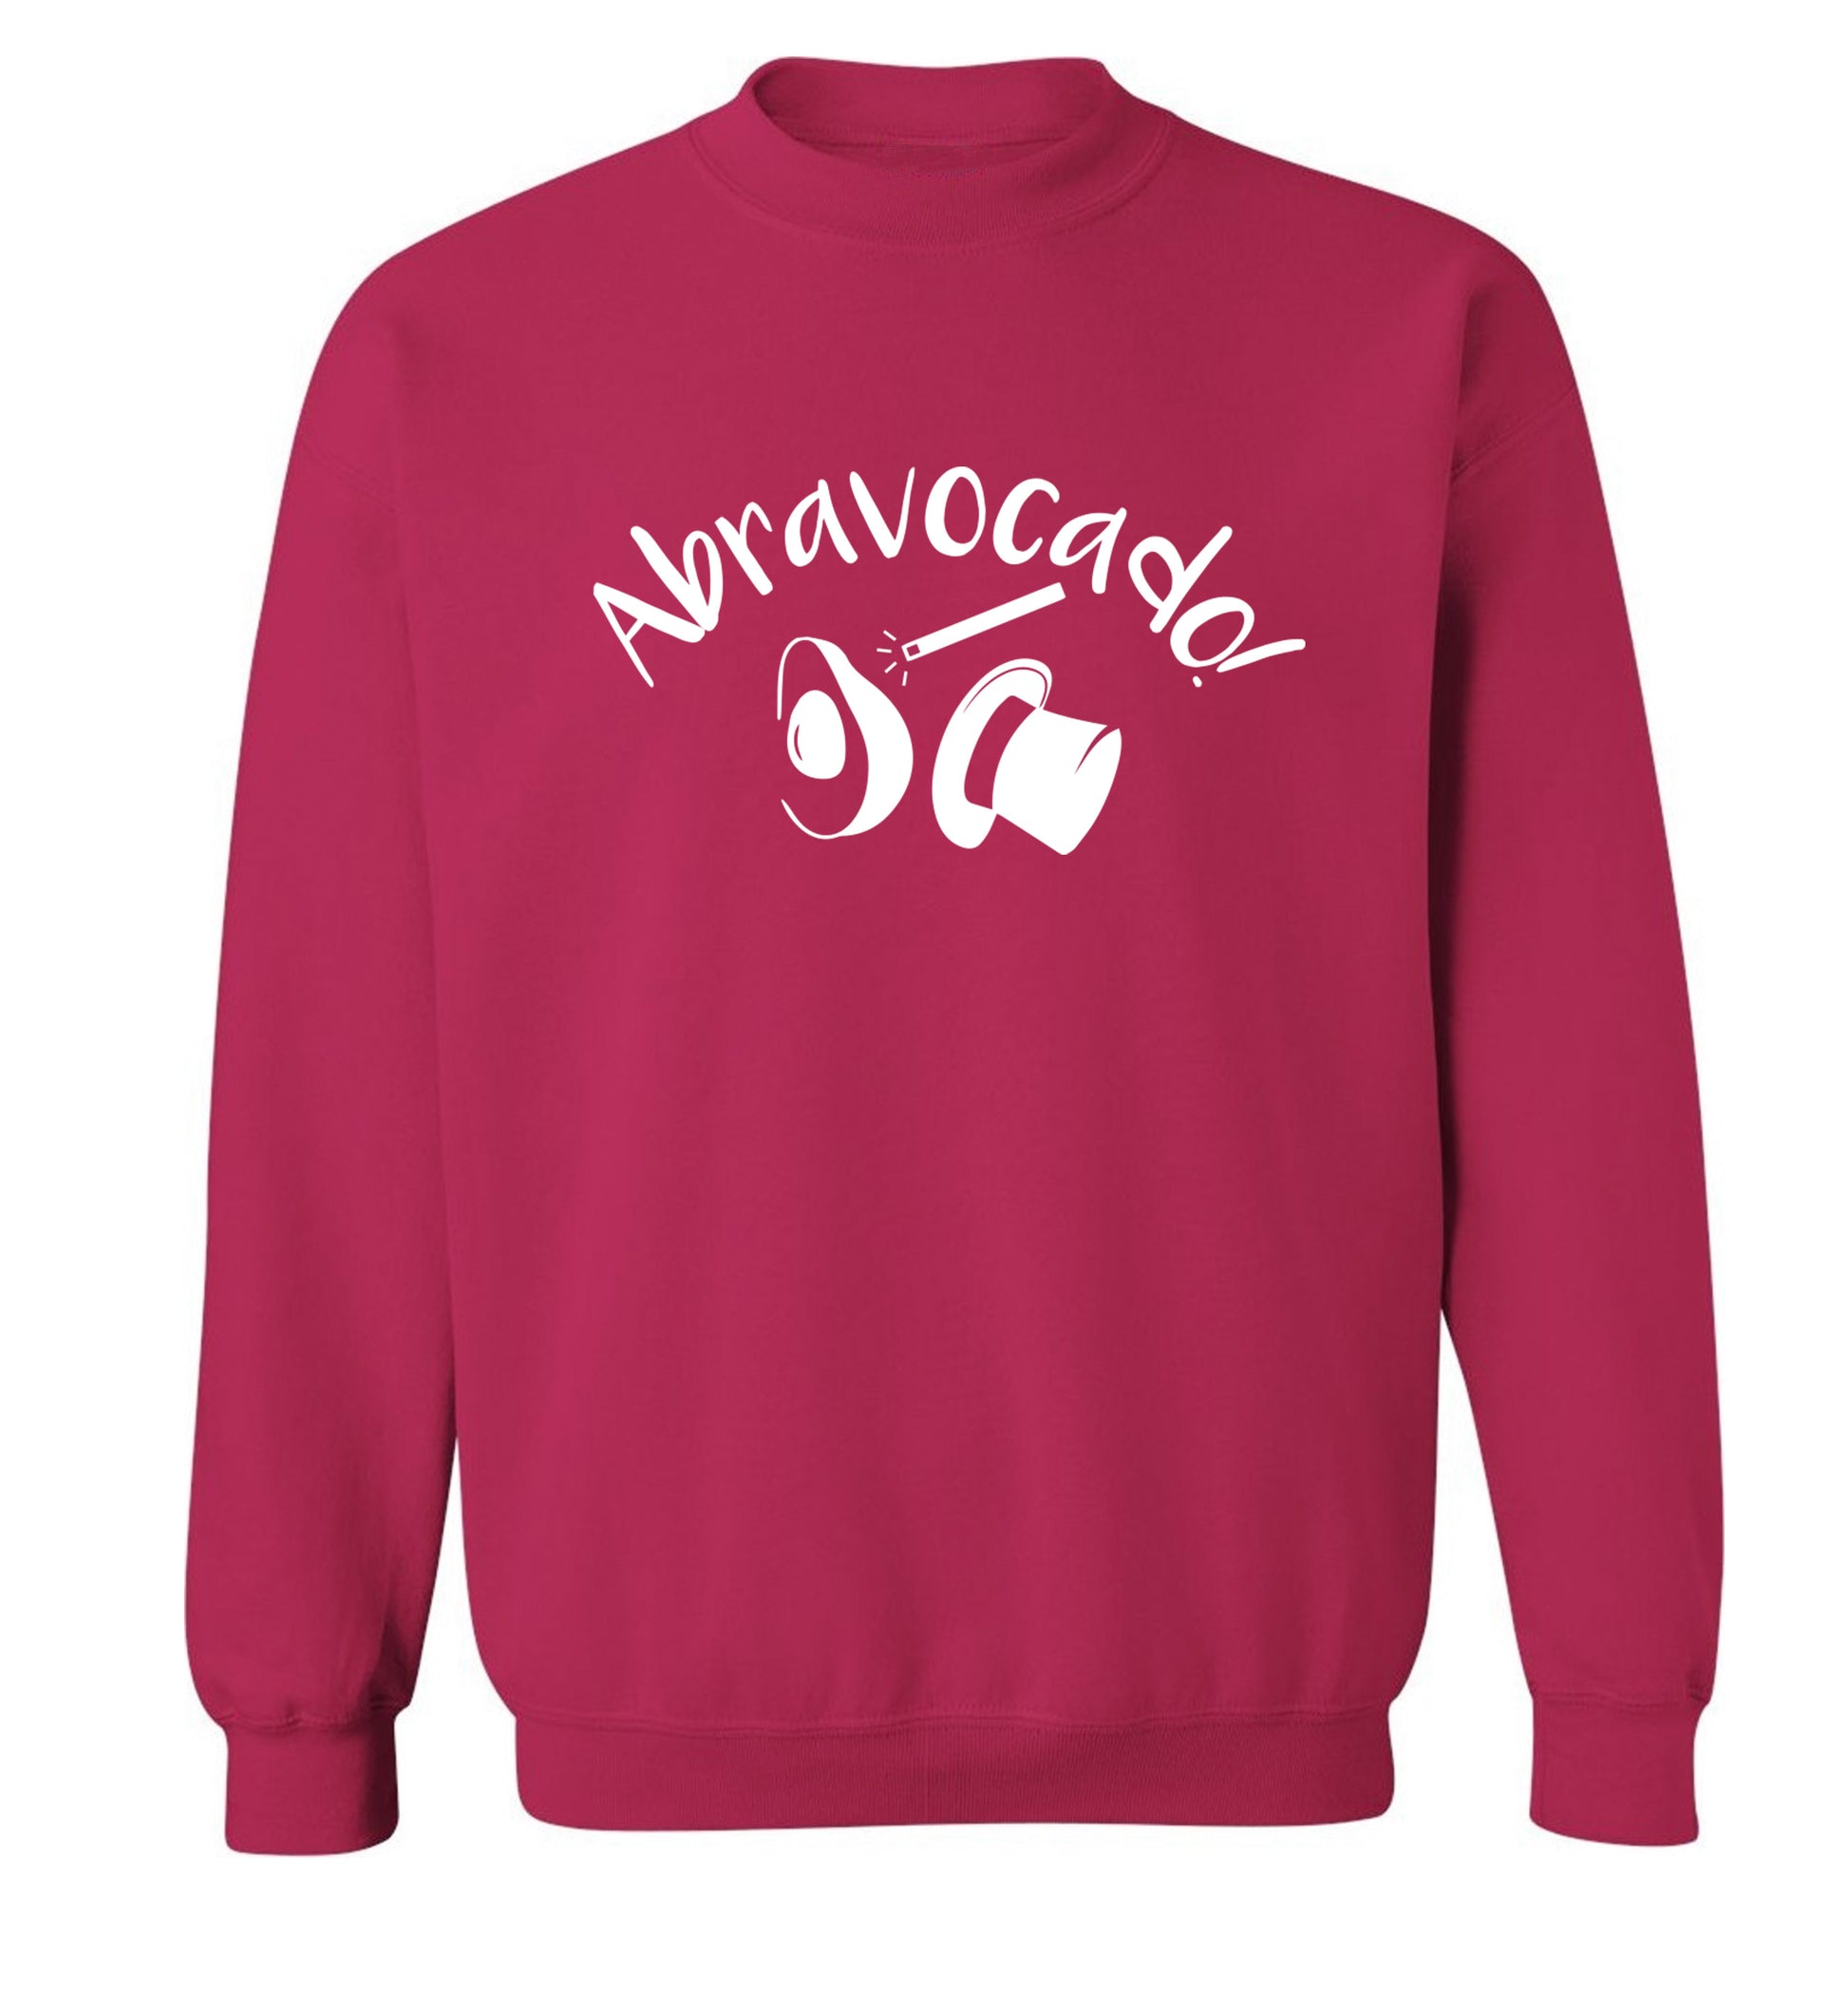 Abravocado Adult's unisex pink Sweater 2XL